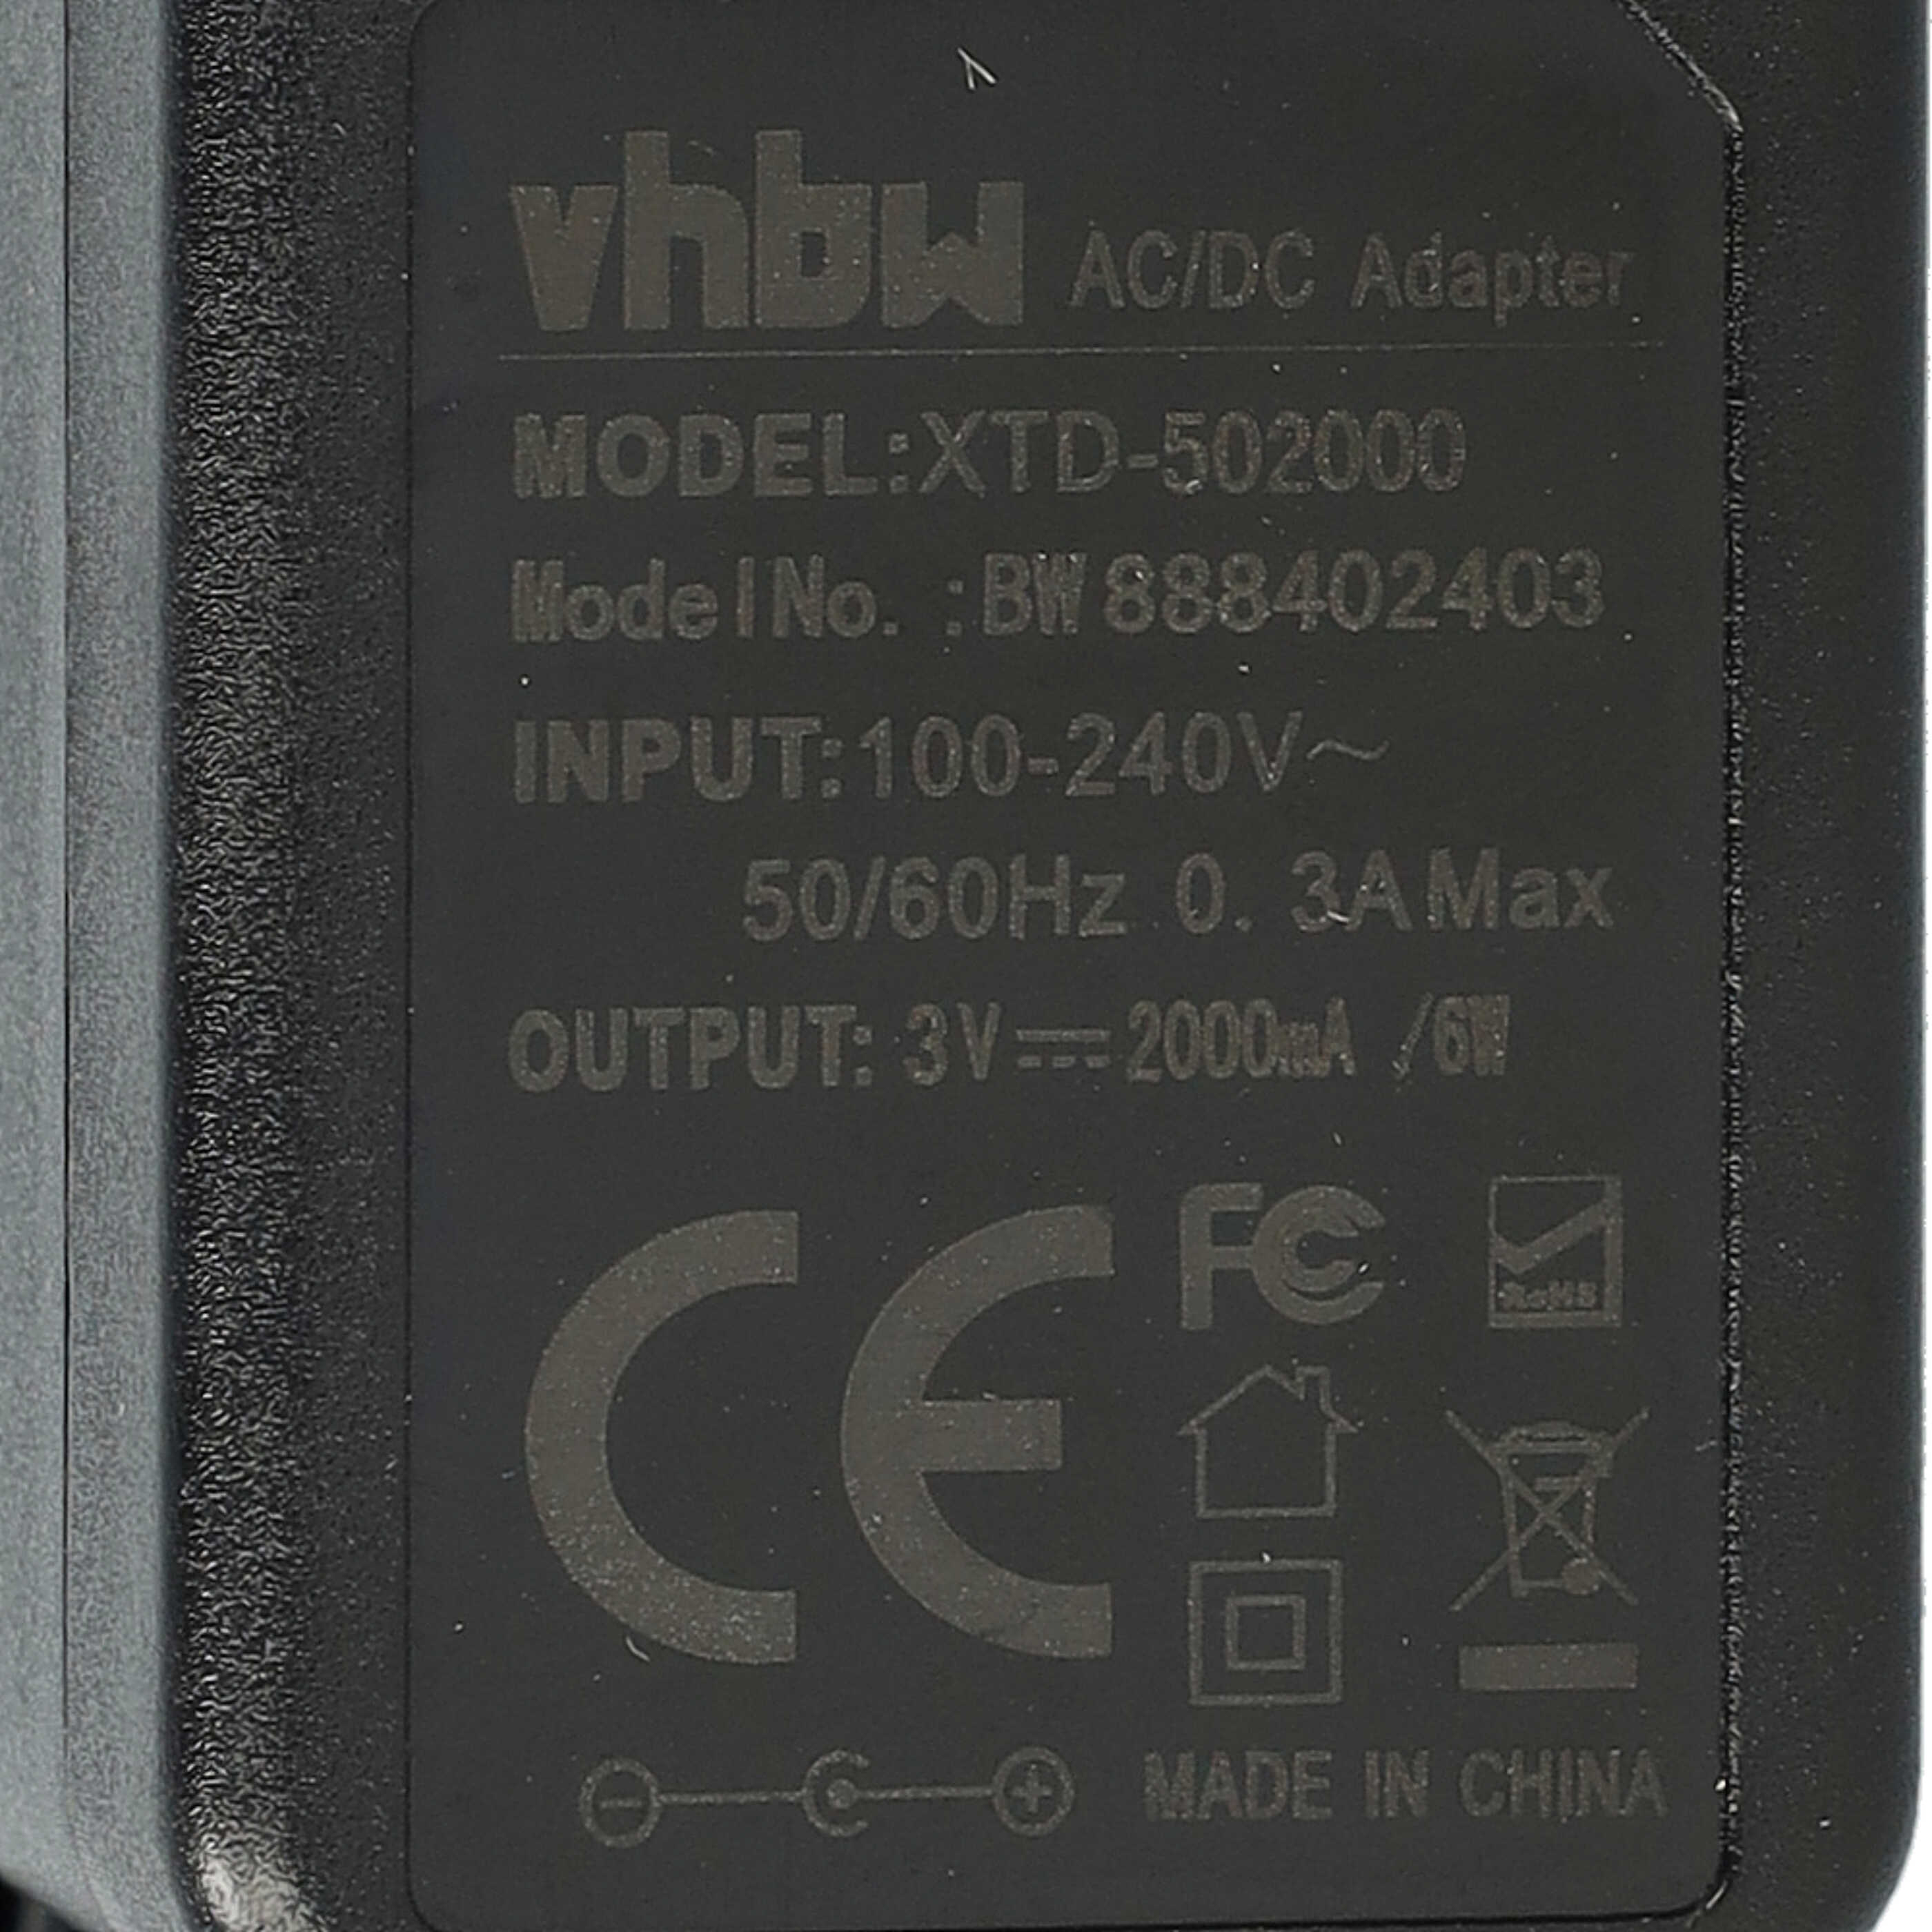 Netzteil mit 5,5 x 2,5 mm Stecker diverse Elektrogeräte - 3 V, 2 A